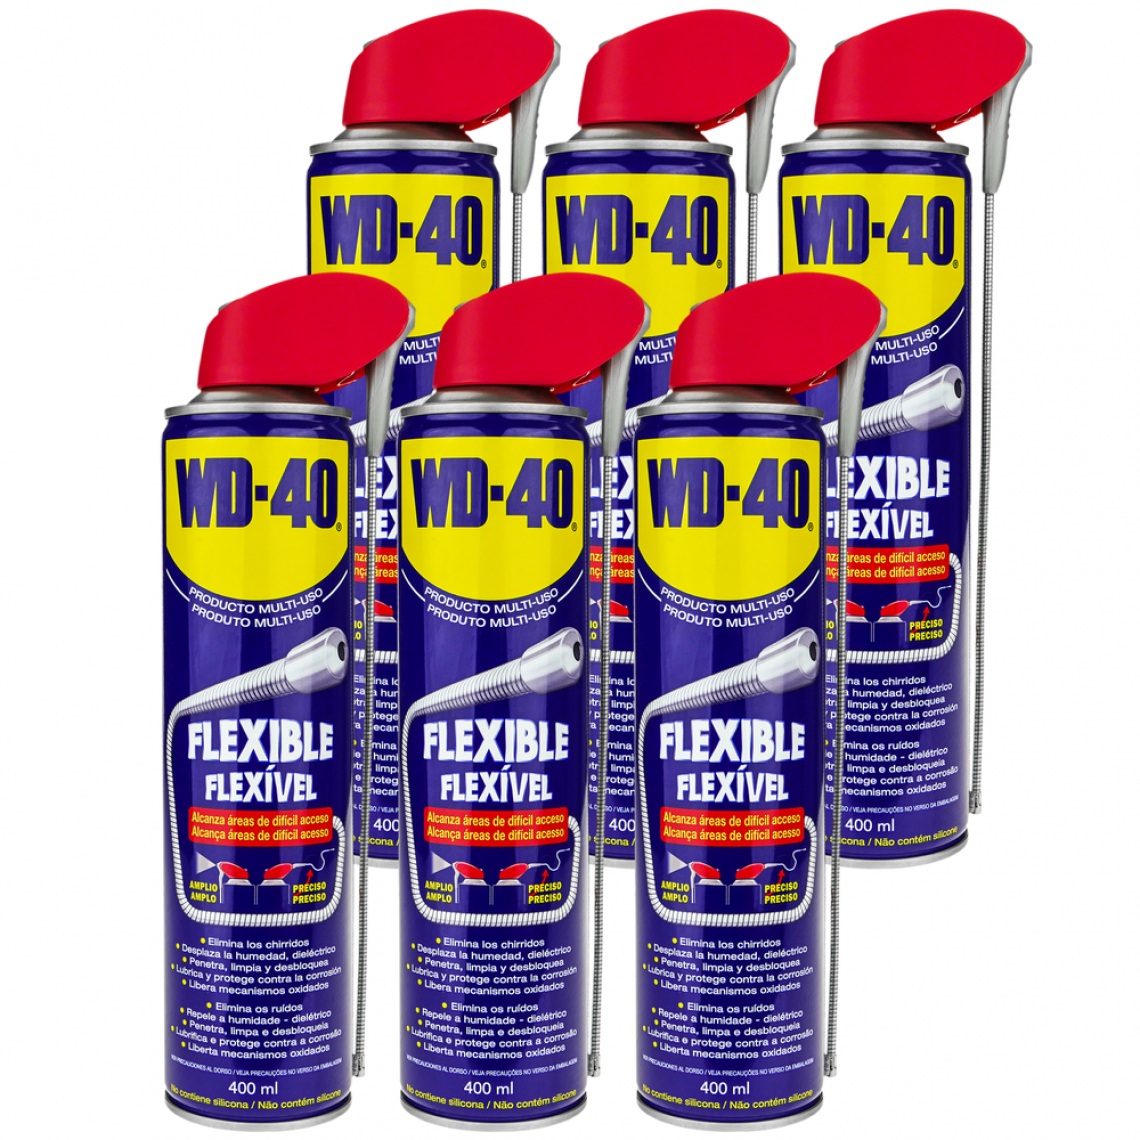 Wd-40 - Spray polyvalent 5 fonctions flexible 400 ml (boîte 6 unités) - Mastic, silicone, joint